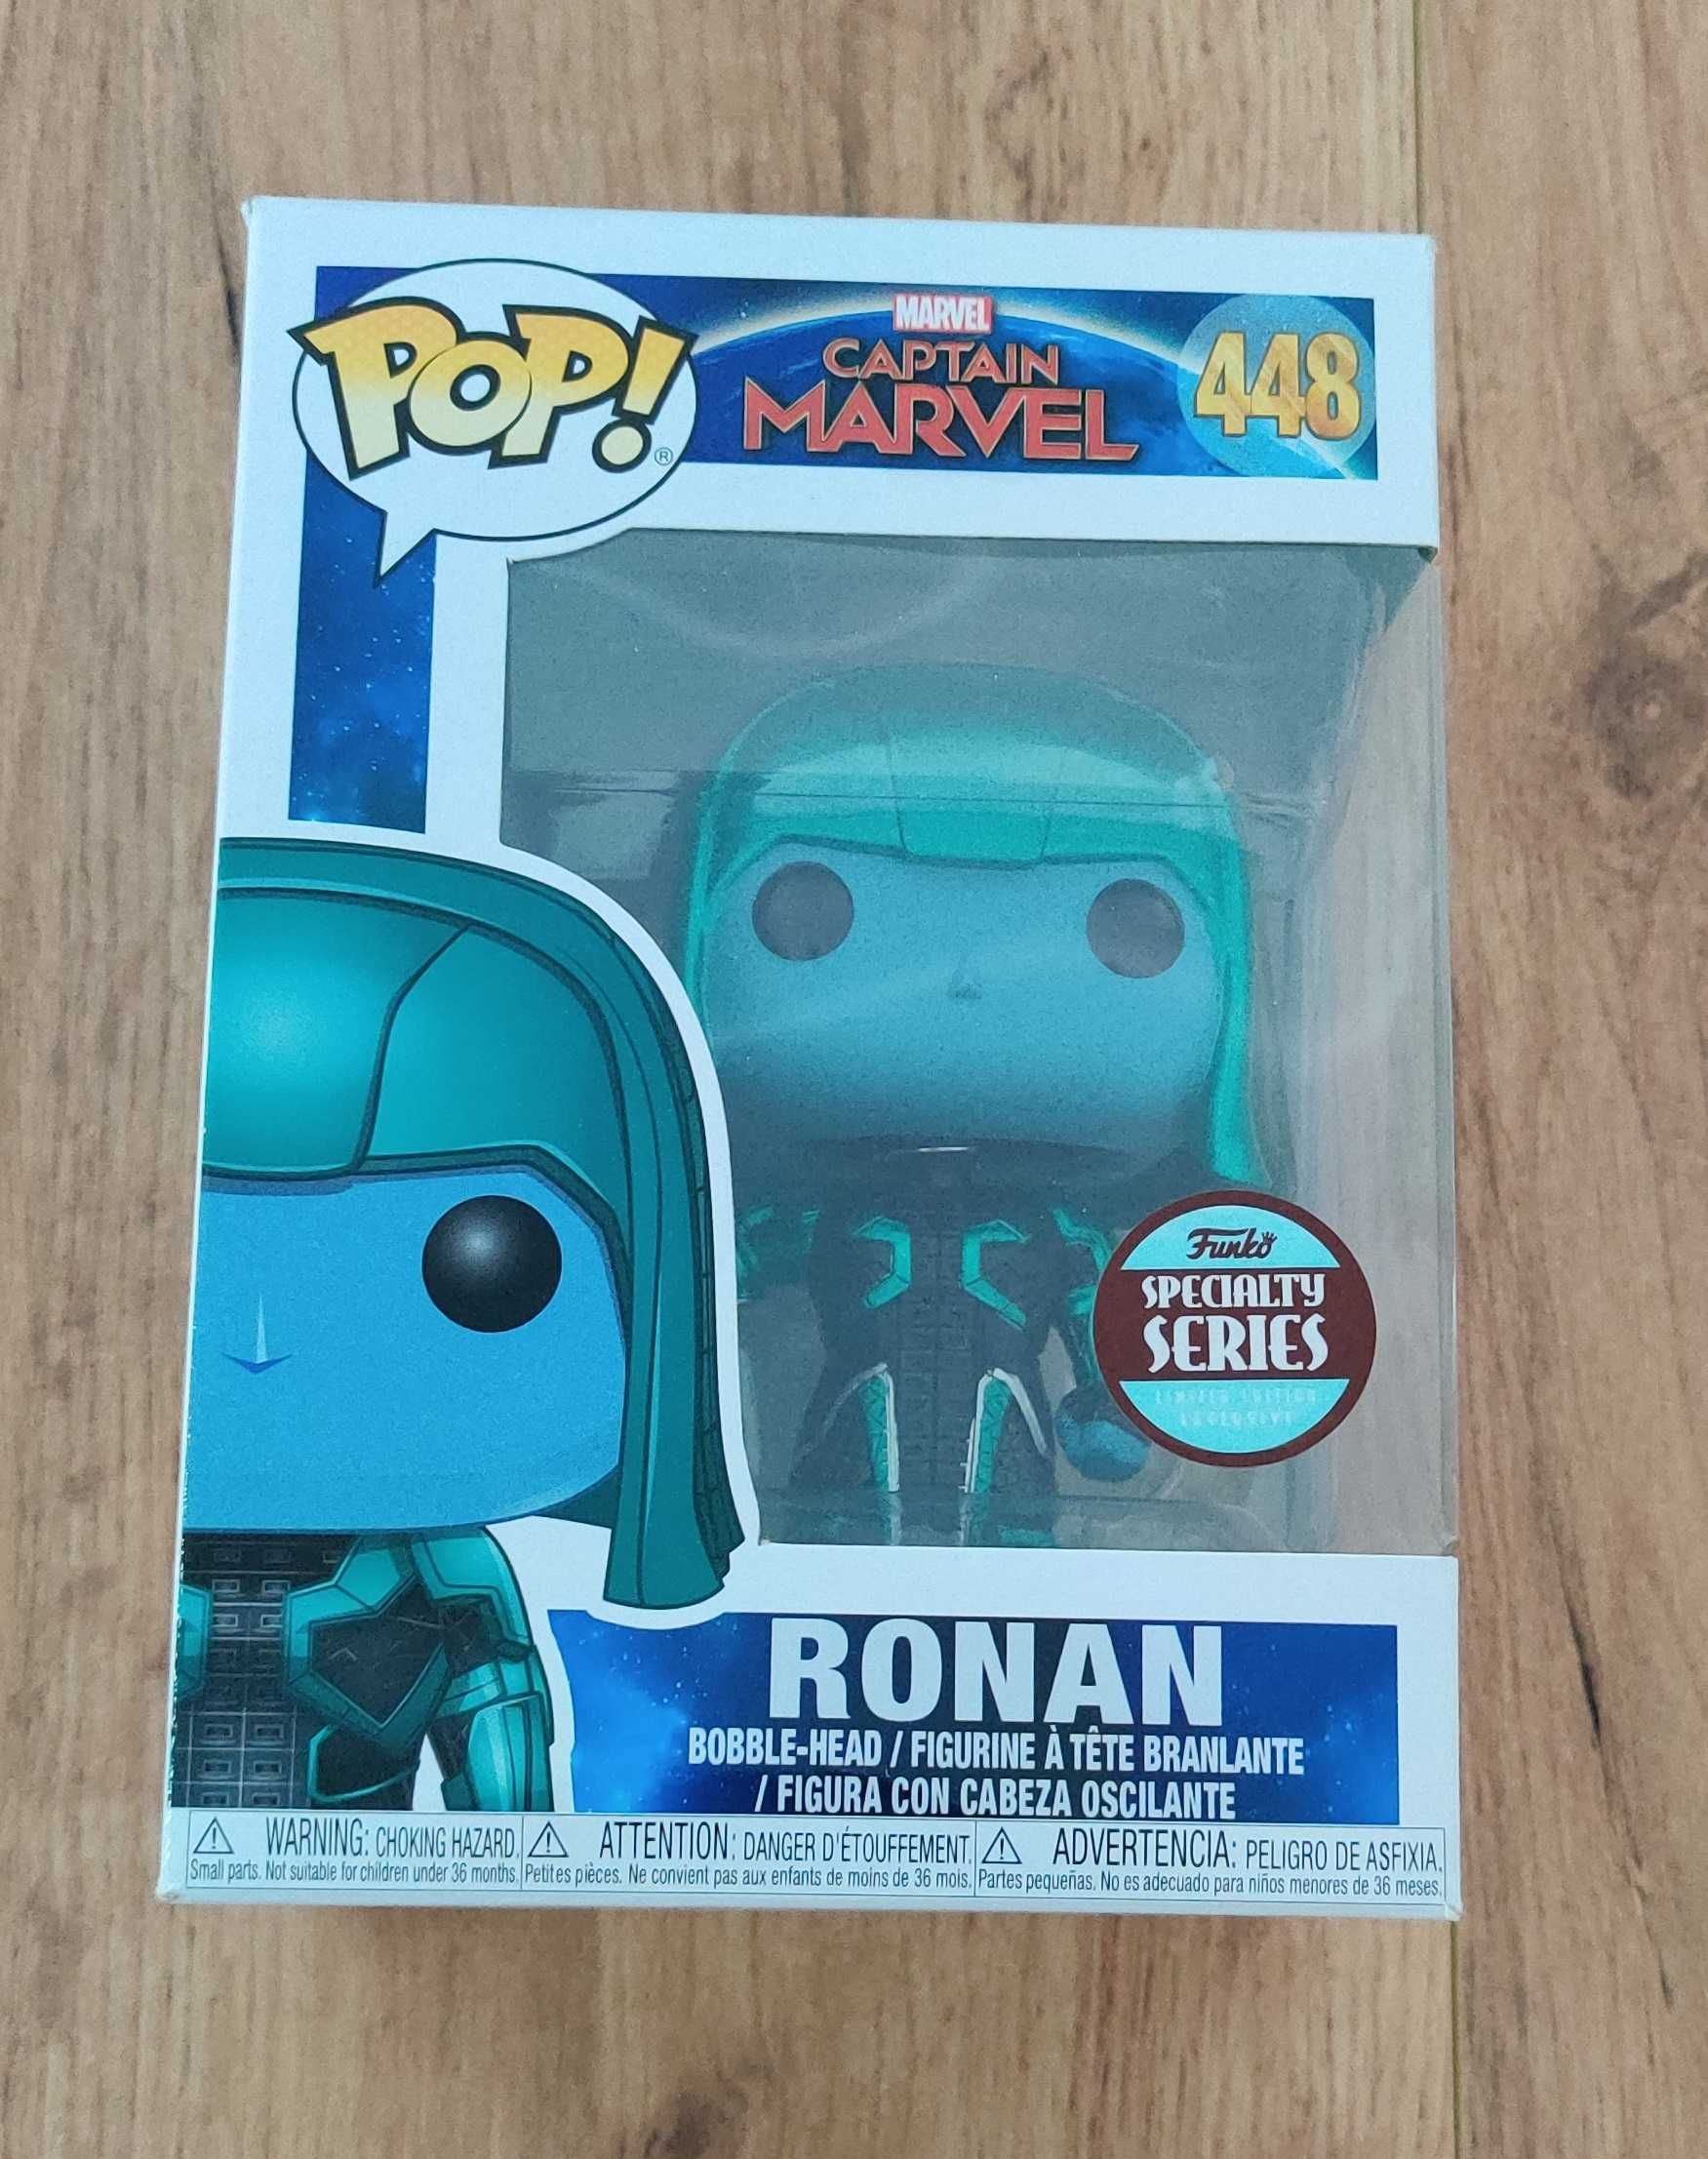 Funko Pop! Captain Marvel Ronan #448